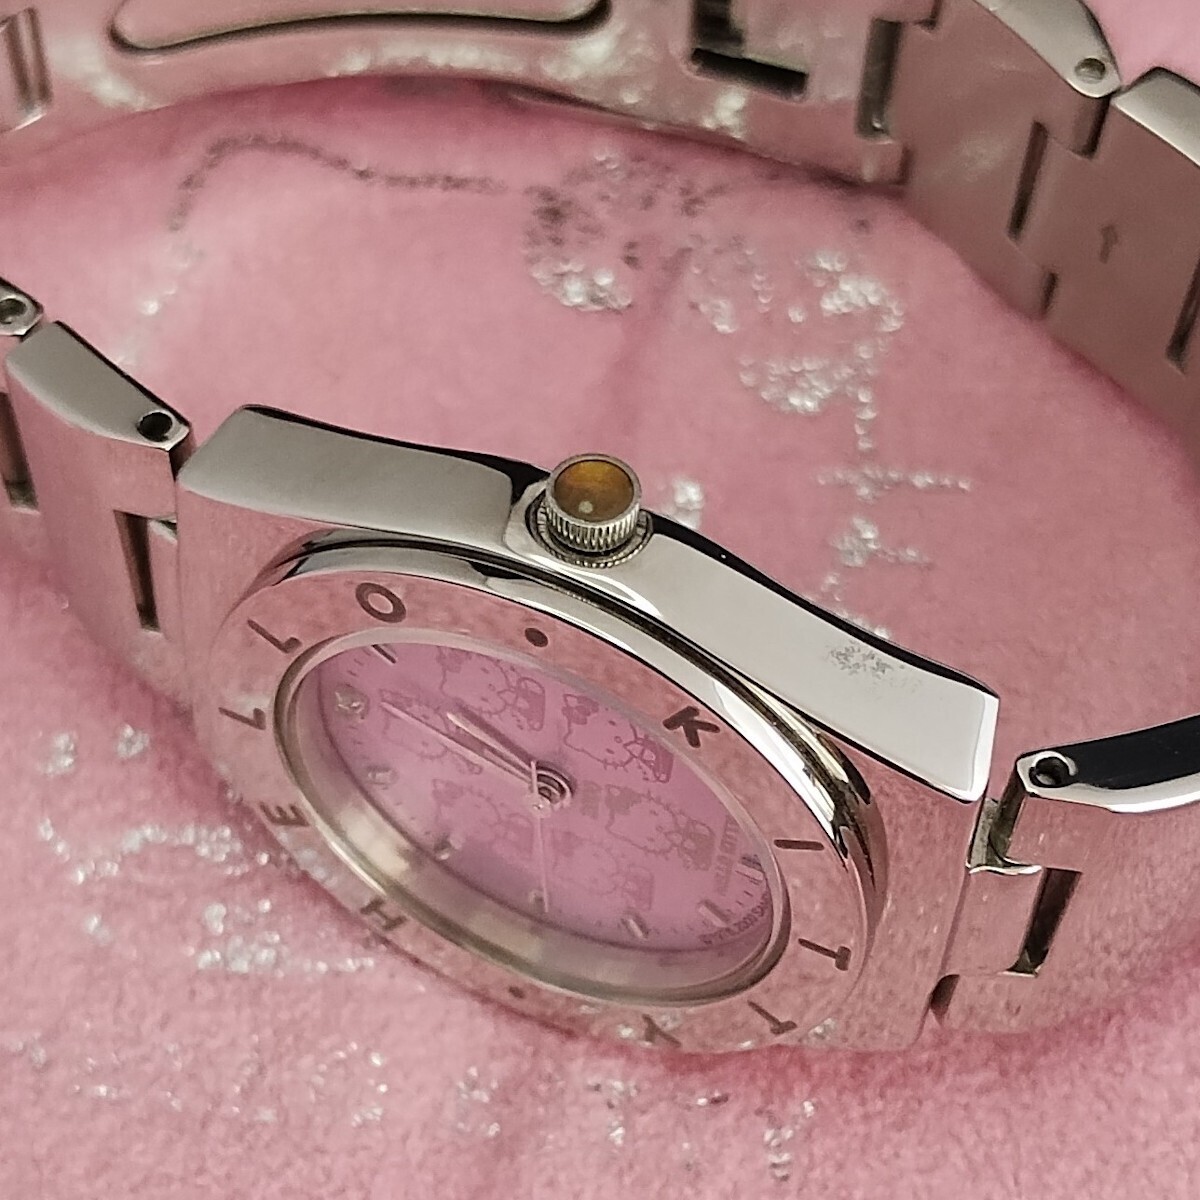 HELLO KITTY millenium Hello Kitty 2000 год память официальный выпуск товар ограниченая версия часы женские наручные часы Sanrio редкость Vintage 